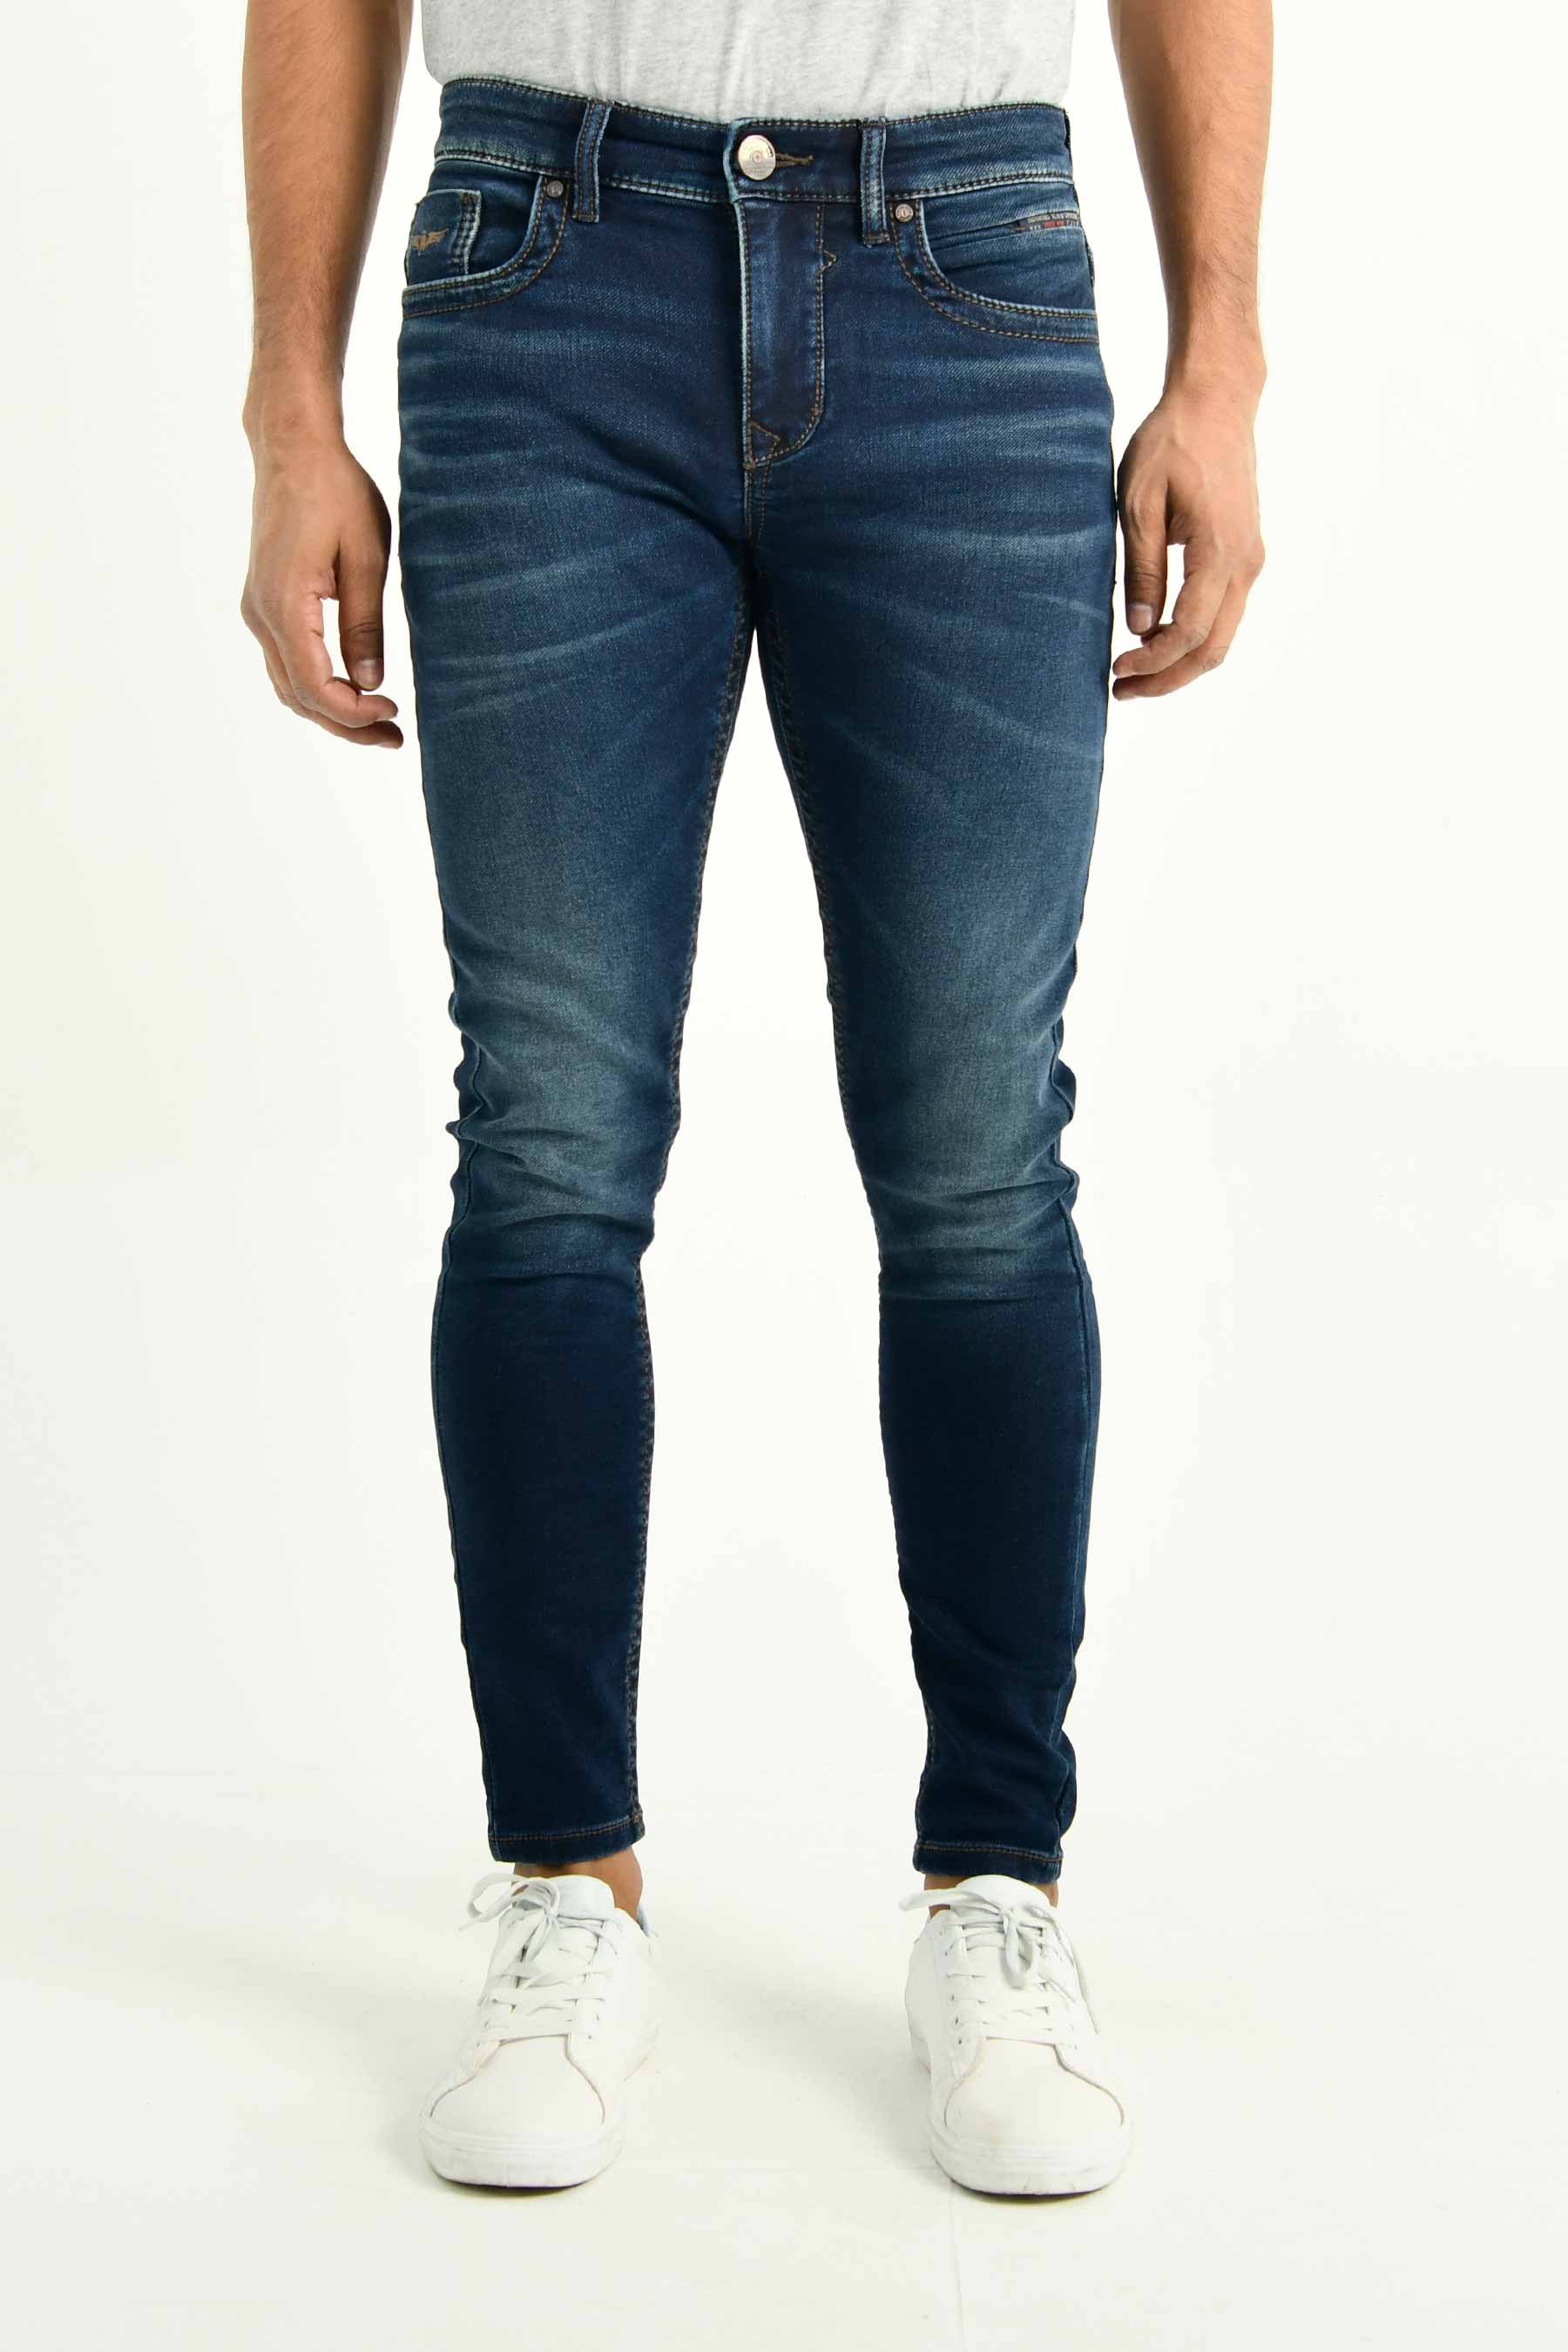 Men’s Denim Jeans – RJ3892